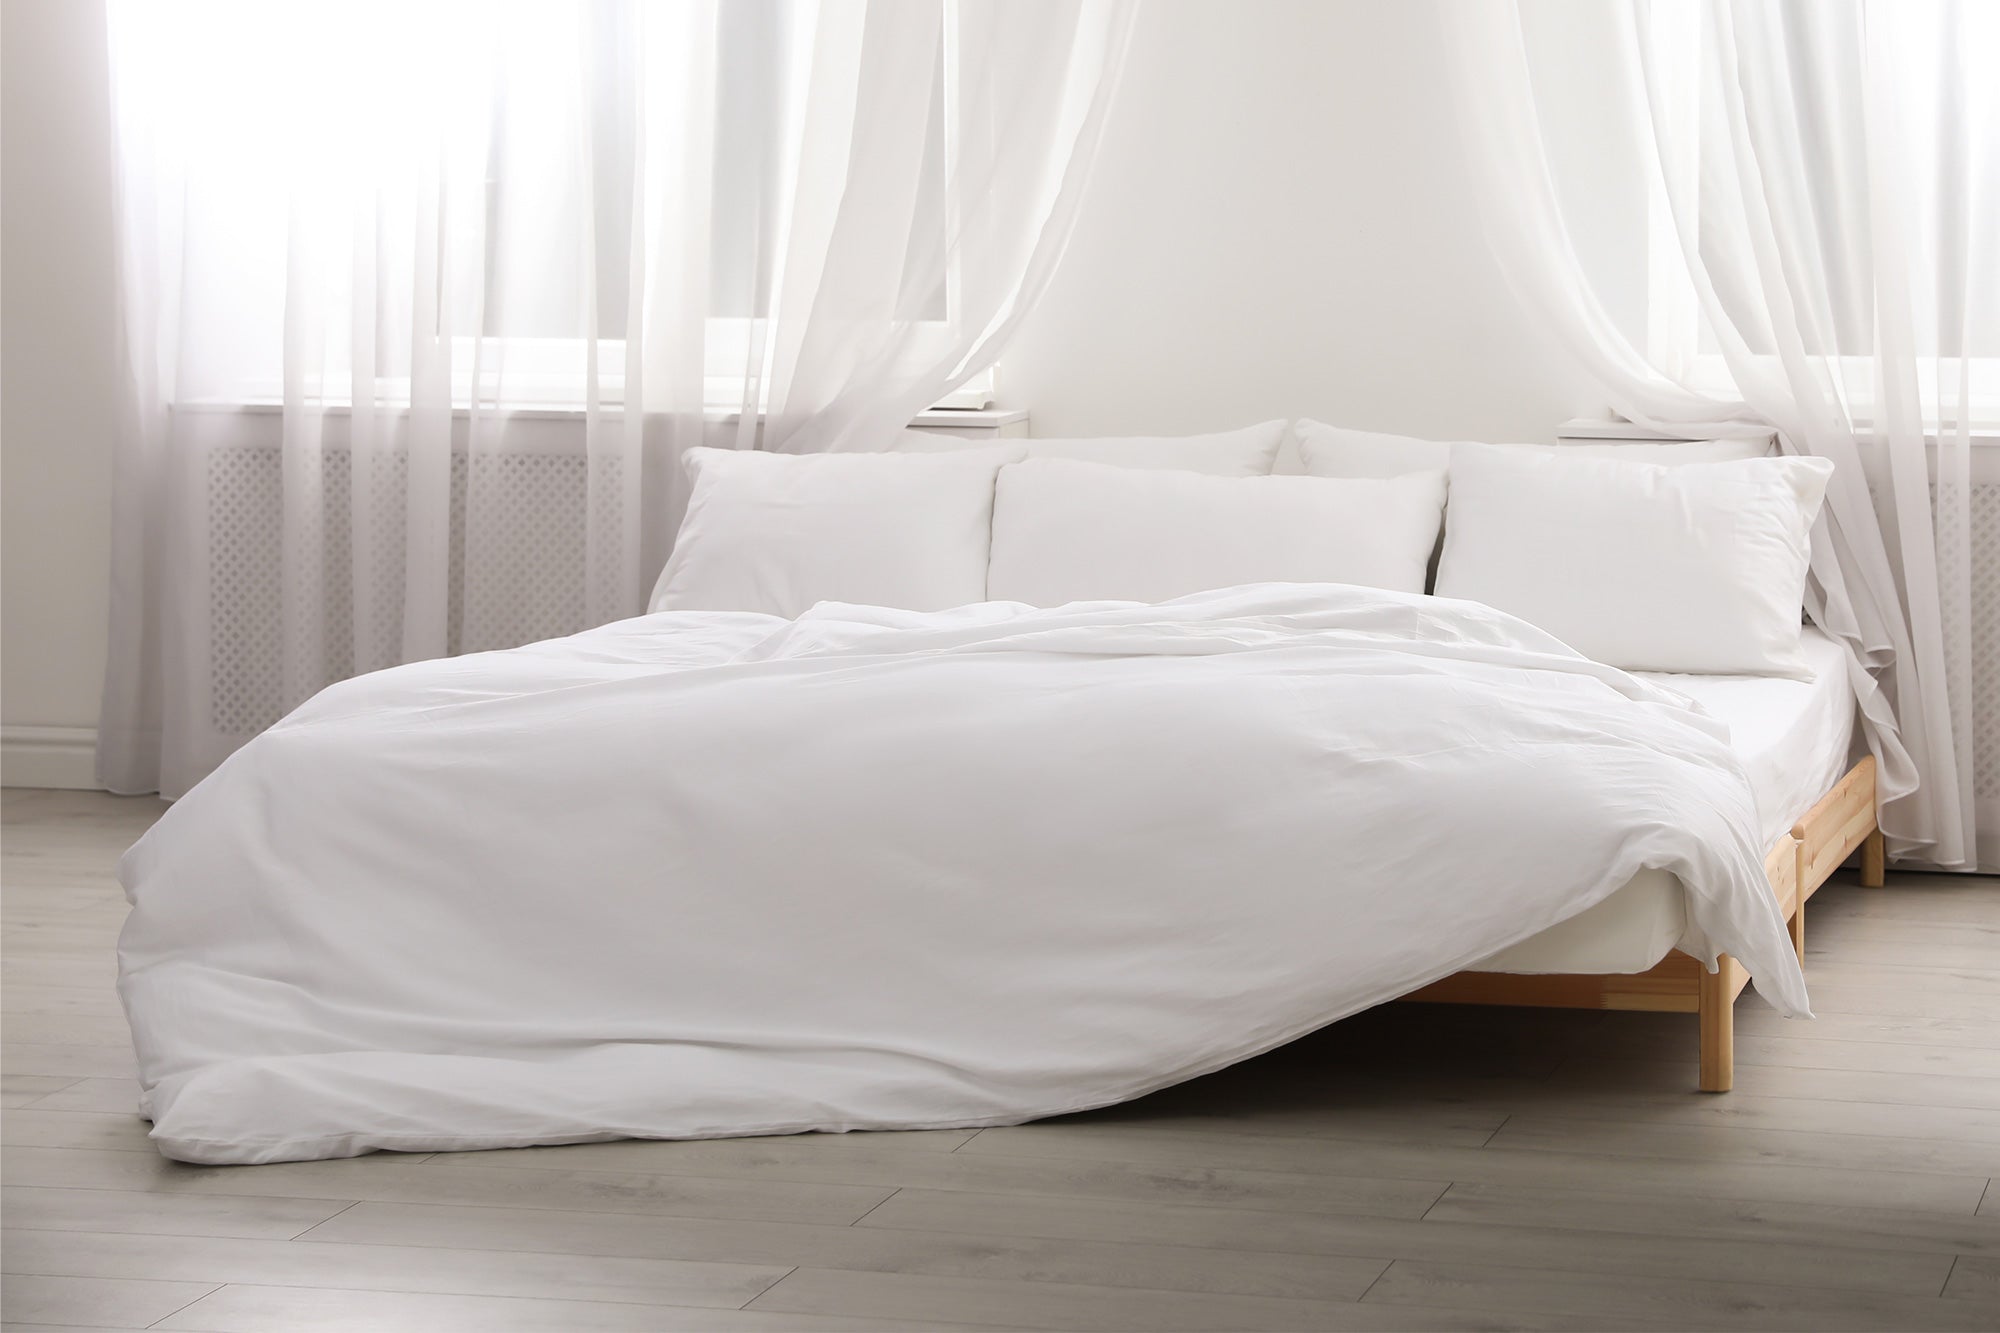 The Lazy Loofie Bundle | Mattress, Comforter & Memory Foam Pillow 2-Pack